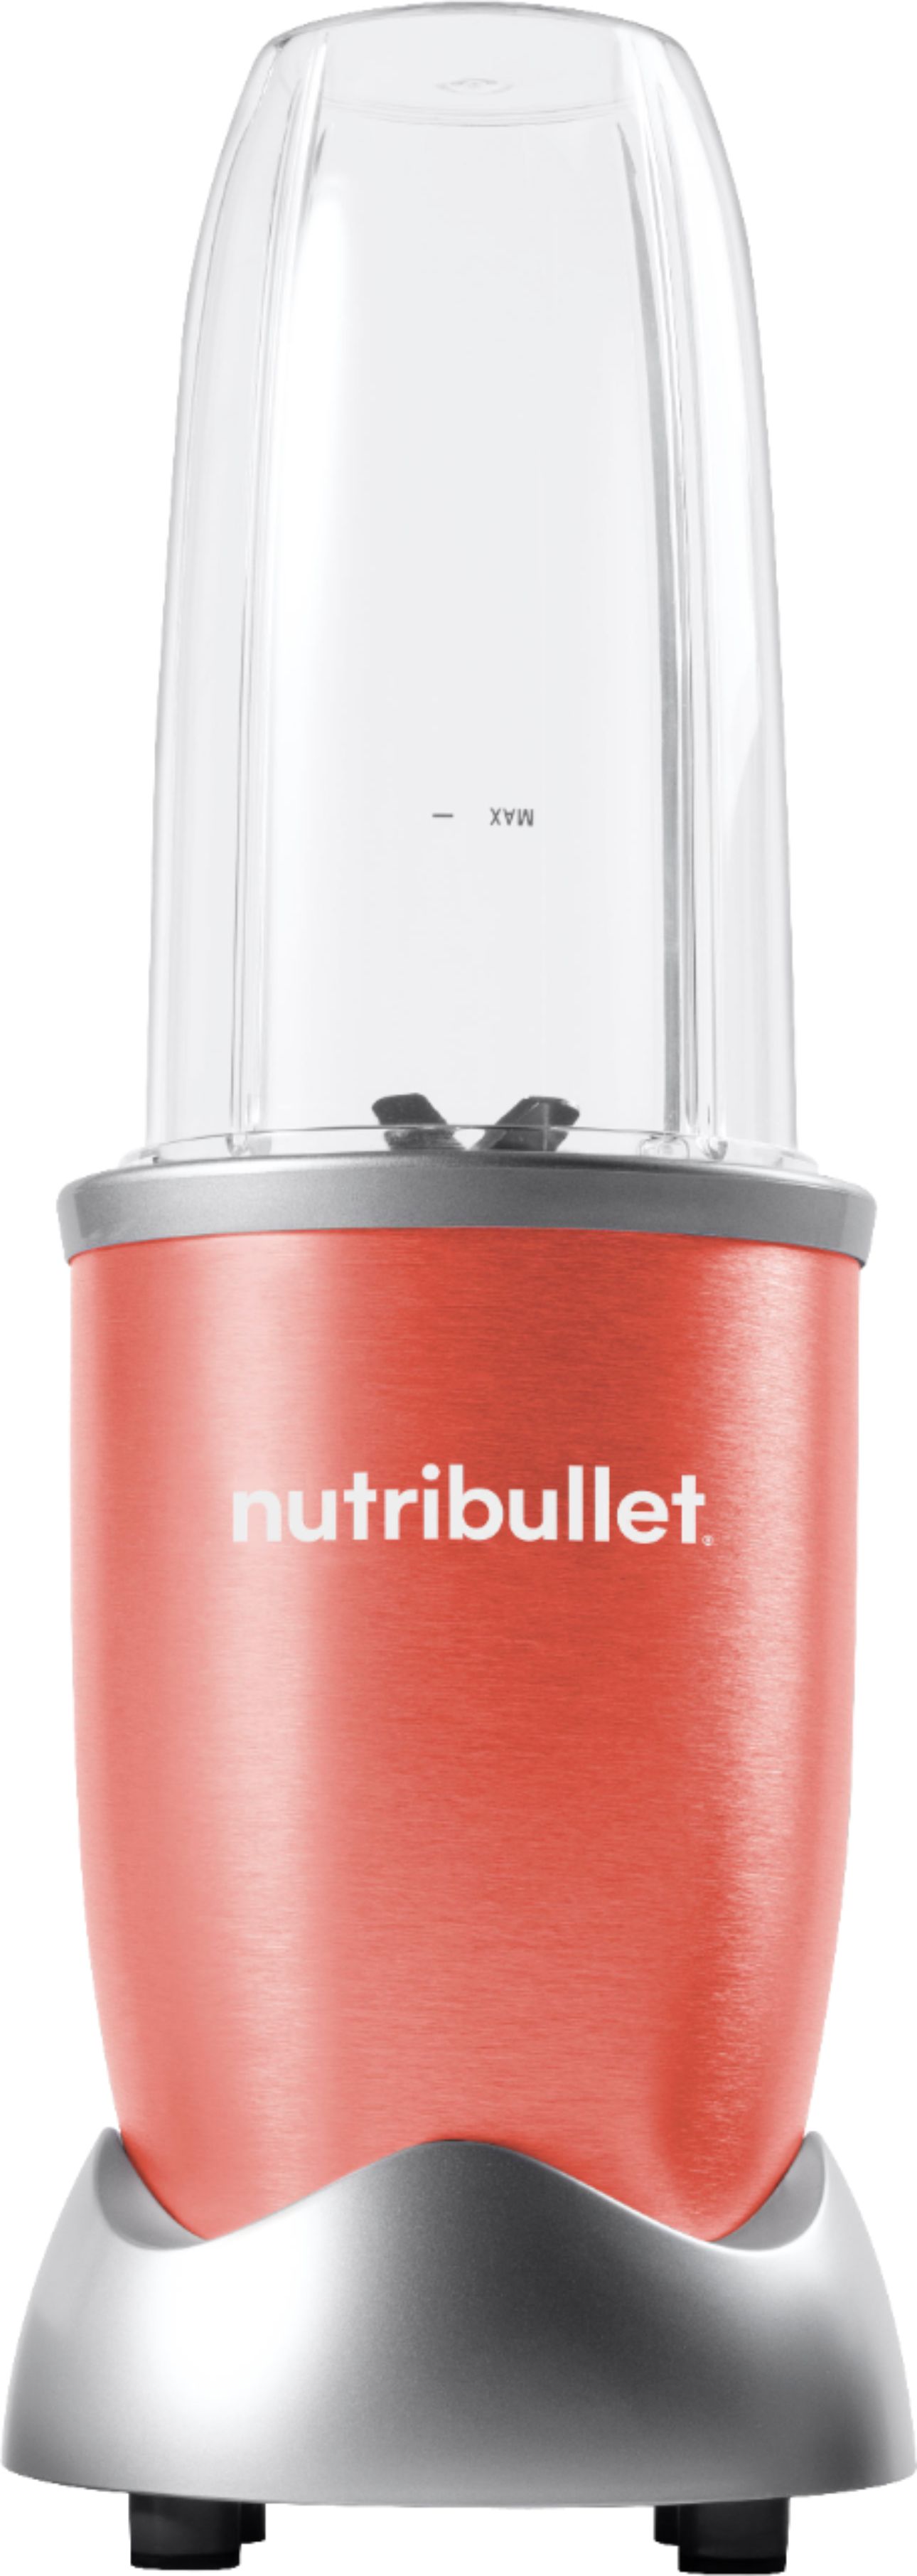 Not a Single Lump: Nutribullet Pro 900 Blender Review